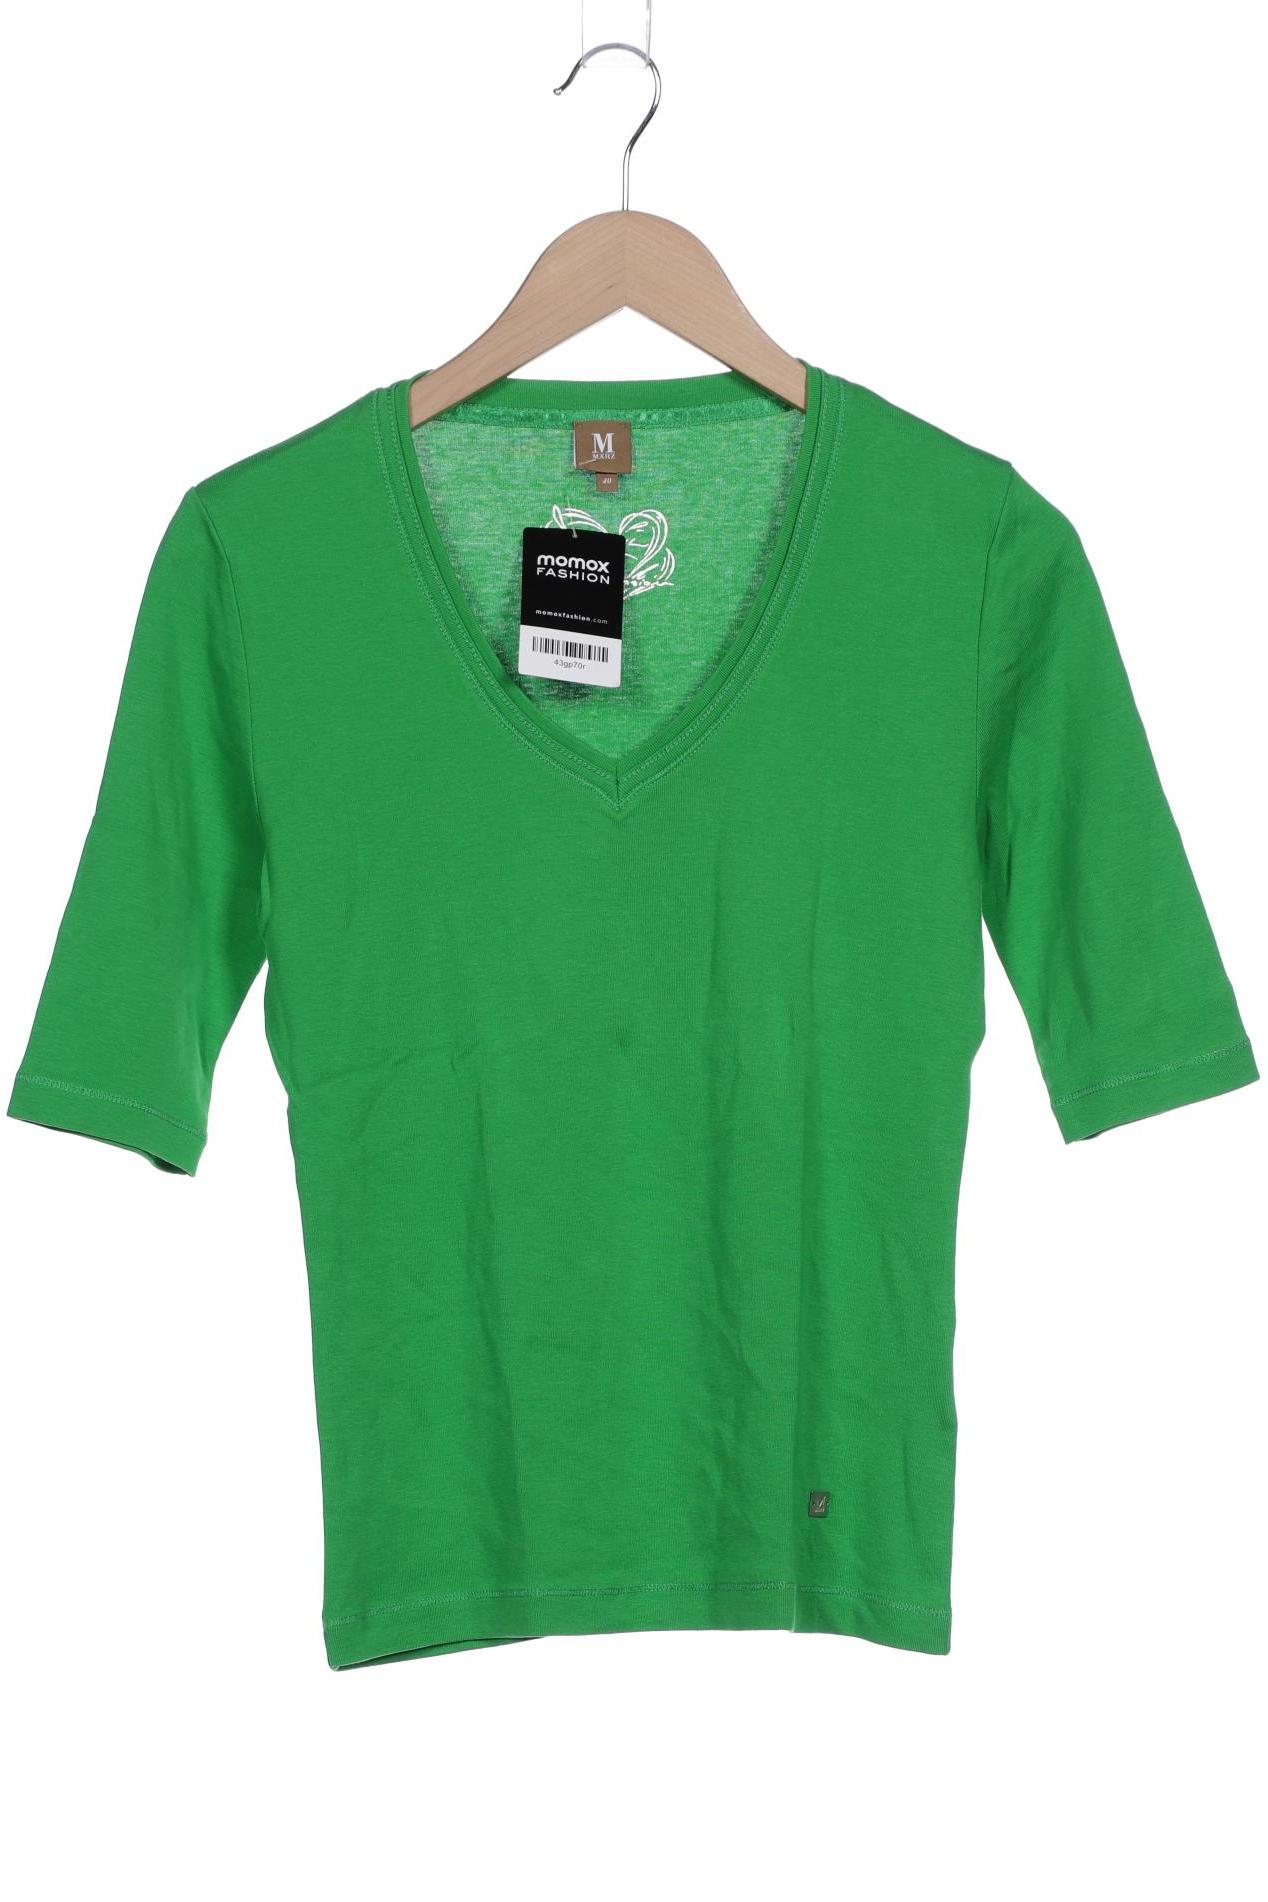 Maerz Damen T-Shirt, grün, Gr. 40 von MAERZ